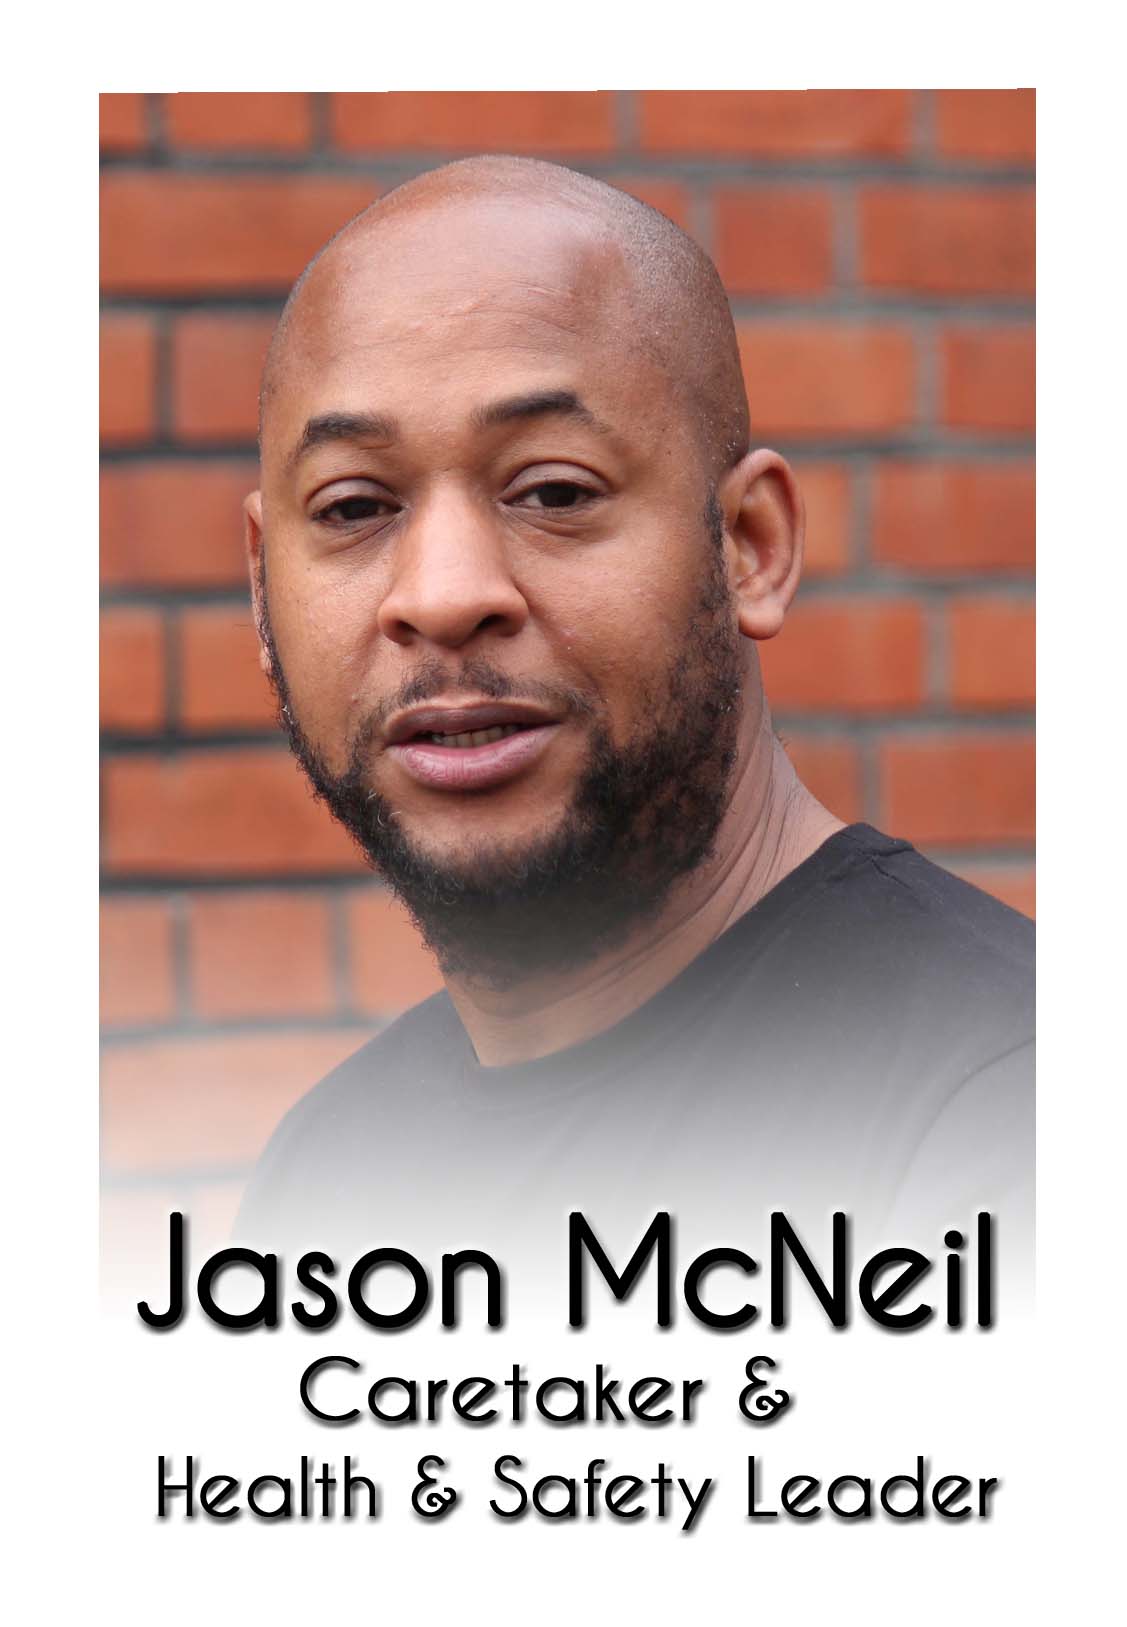 Jason McNeil labelled